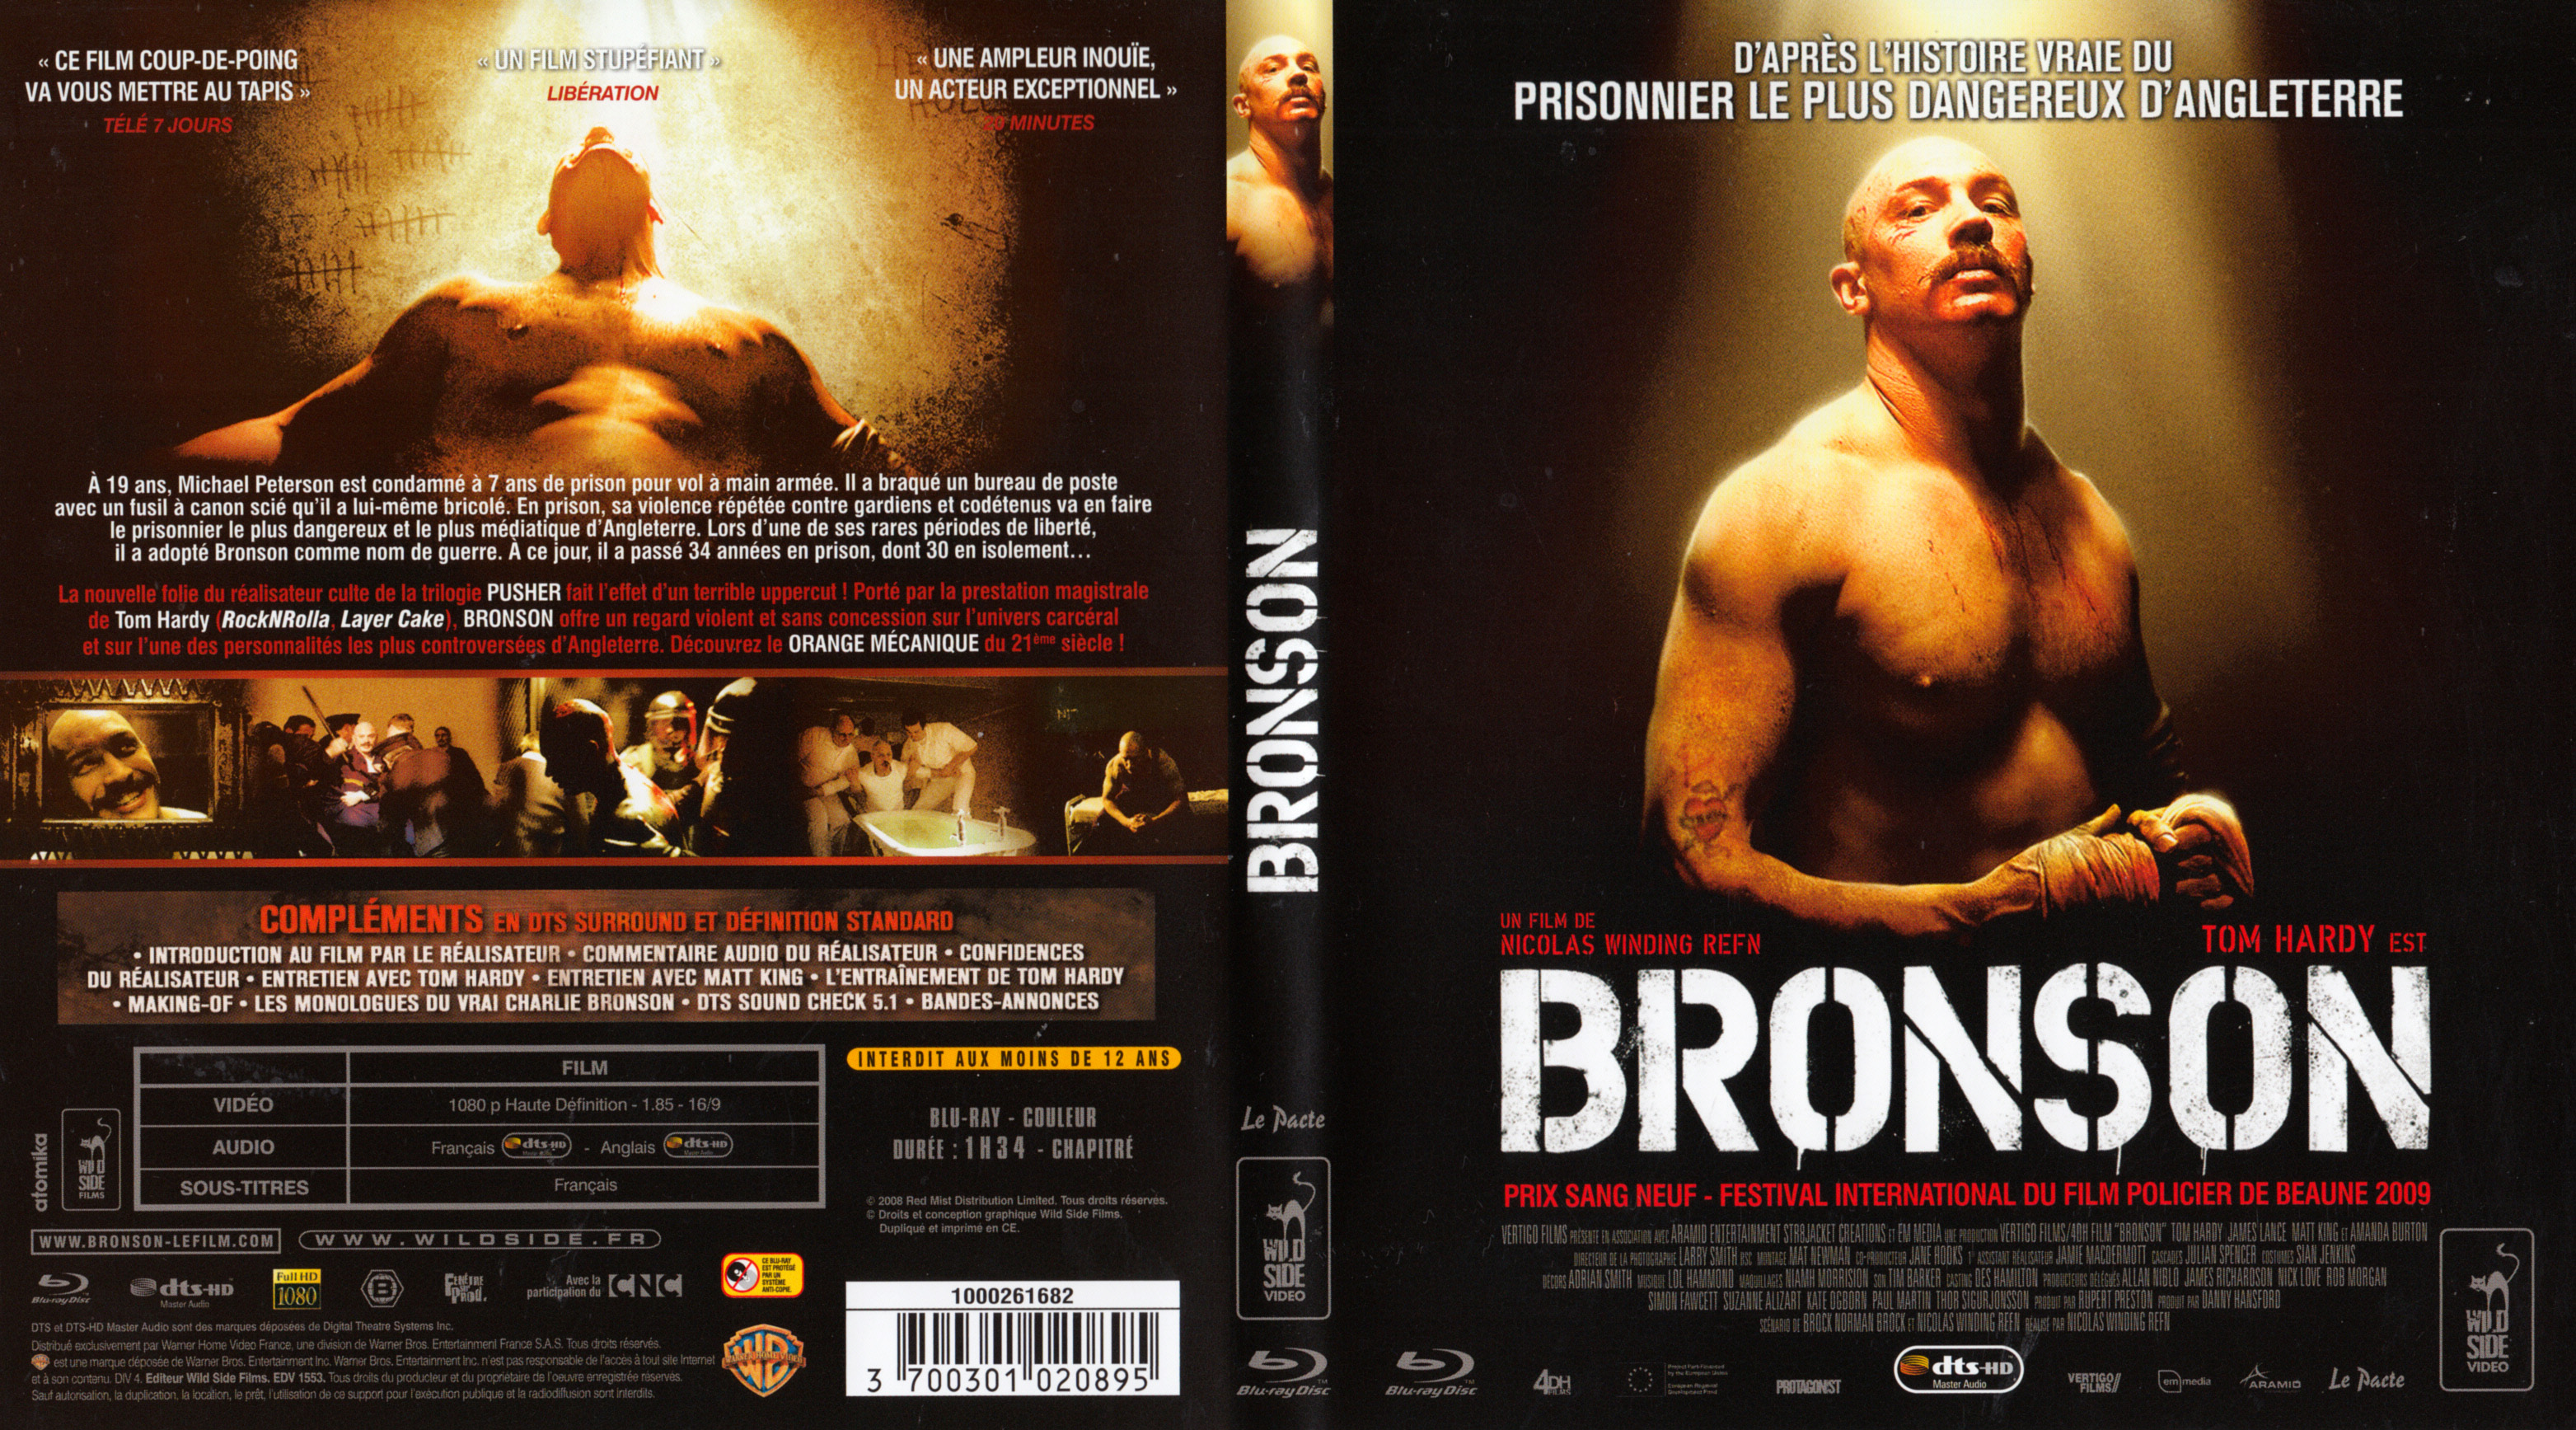 Jaquette DVD Bronson (BLU-RAY) v2